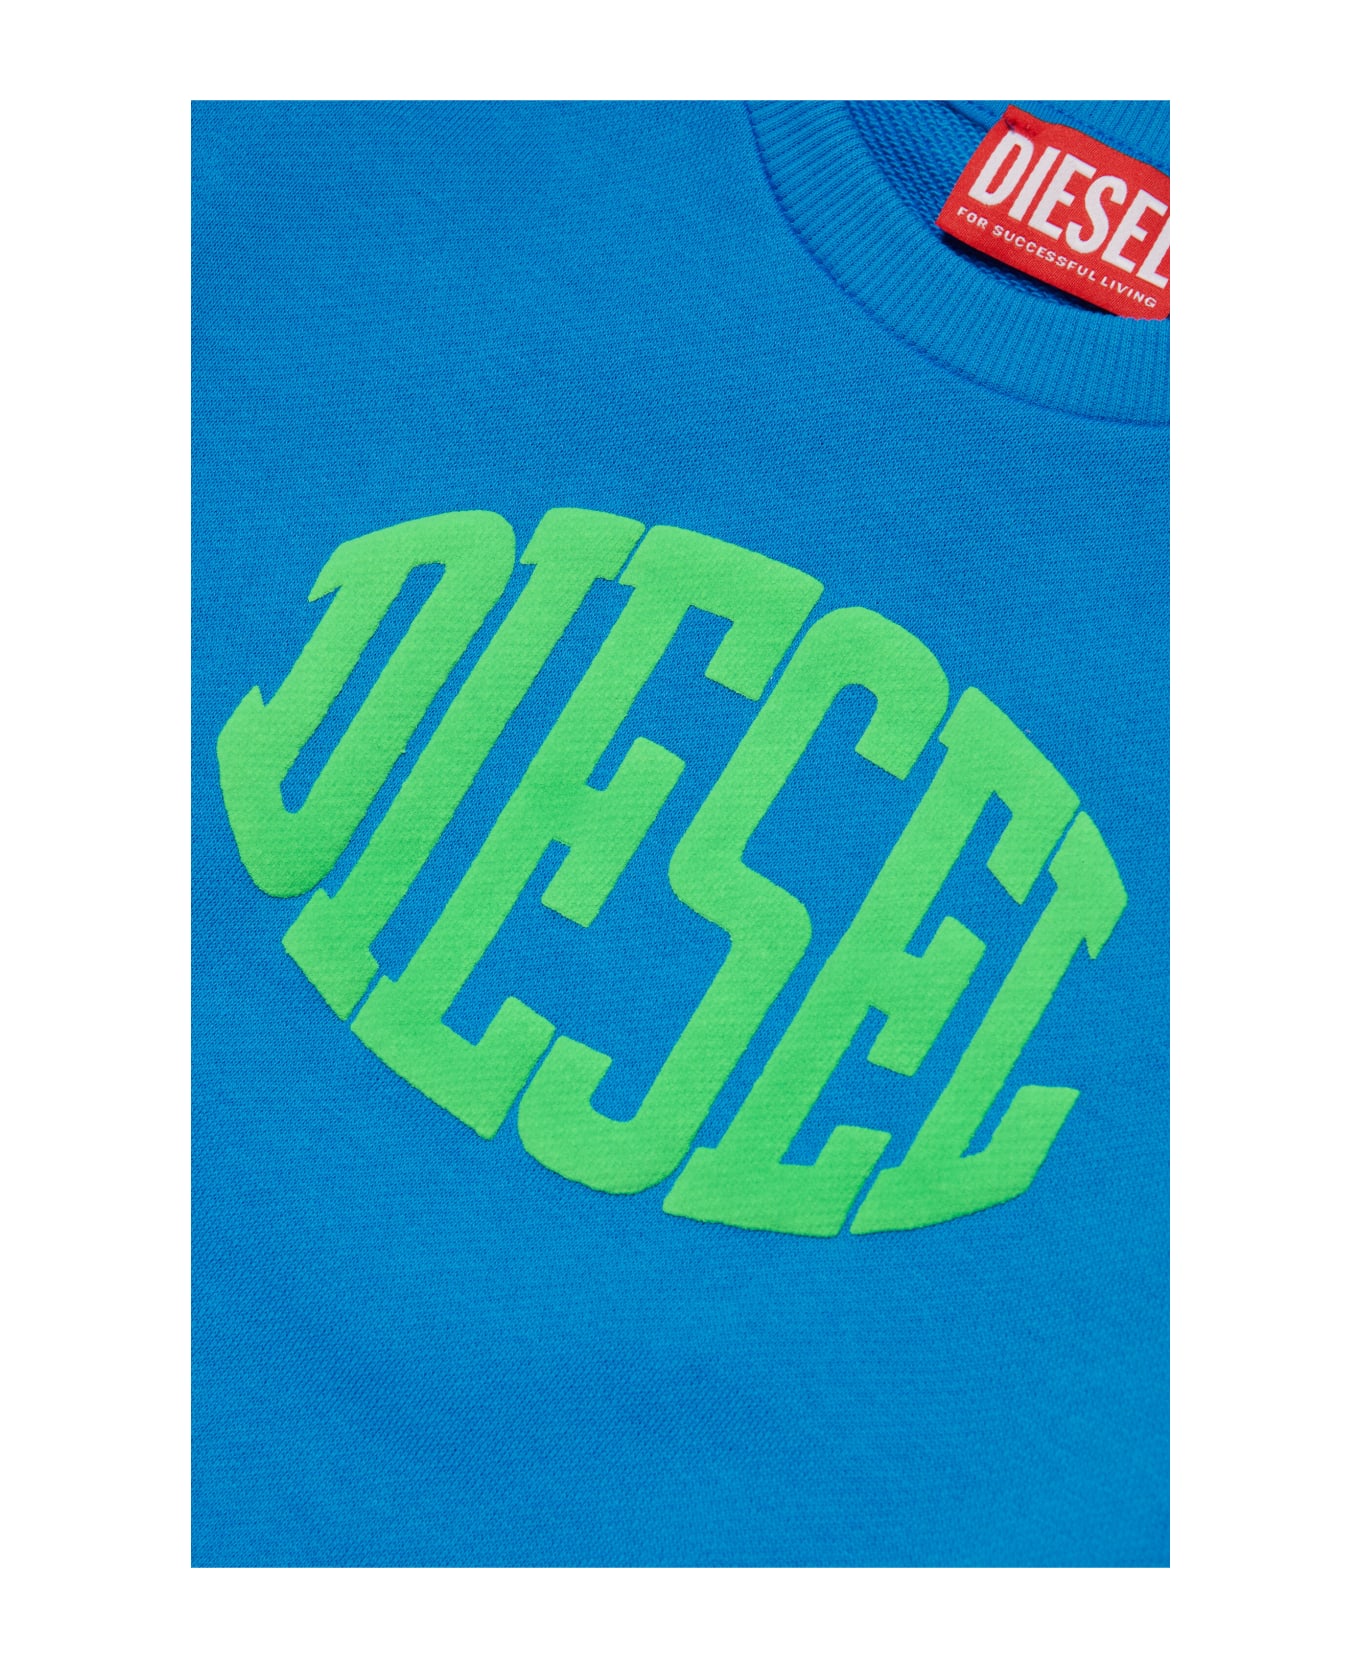 Diesel Sbell Over Sweat-shirt Diesel Crew-neck Sweatshirt With Puffy Print